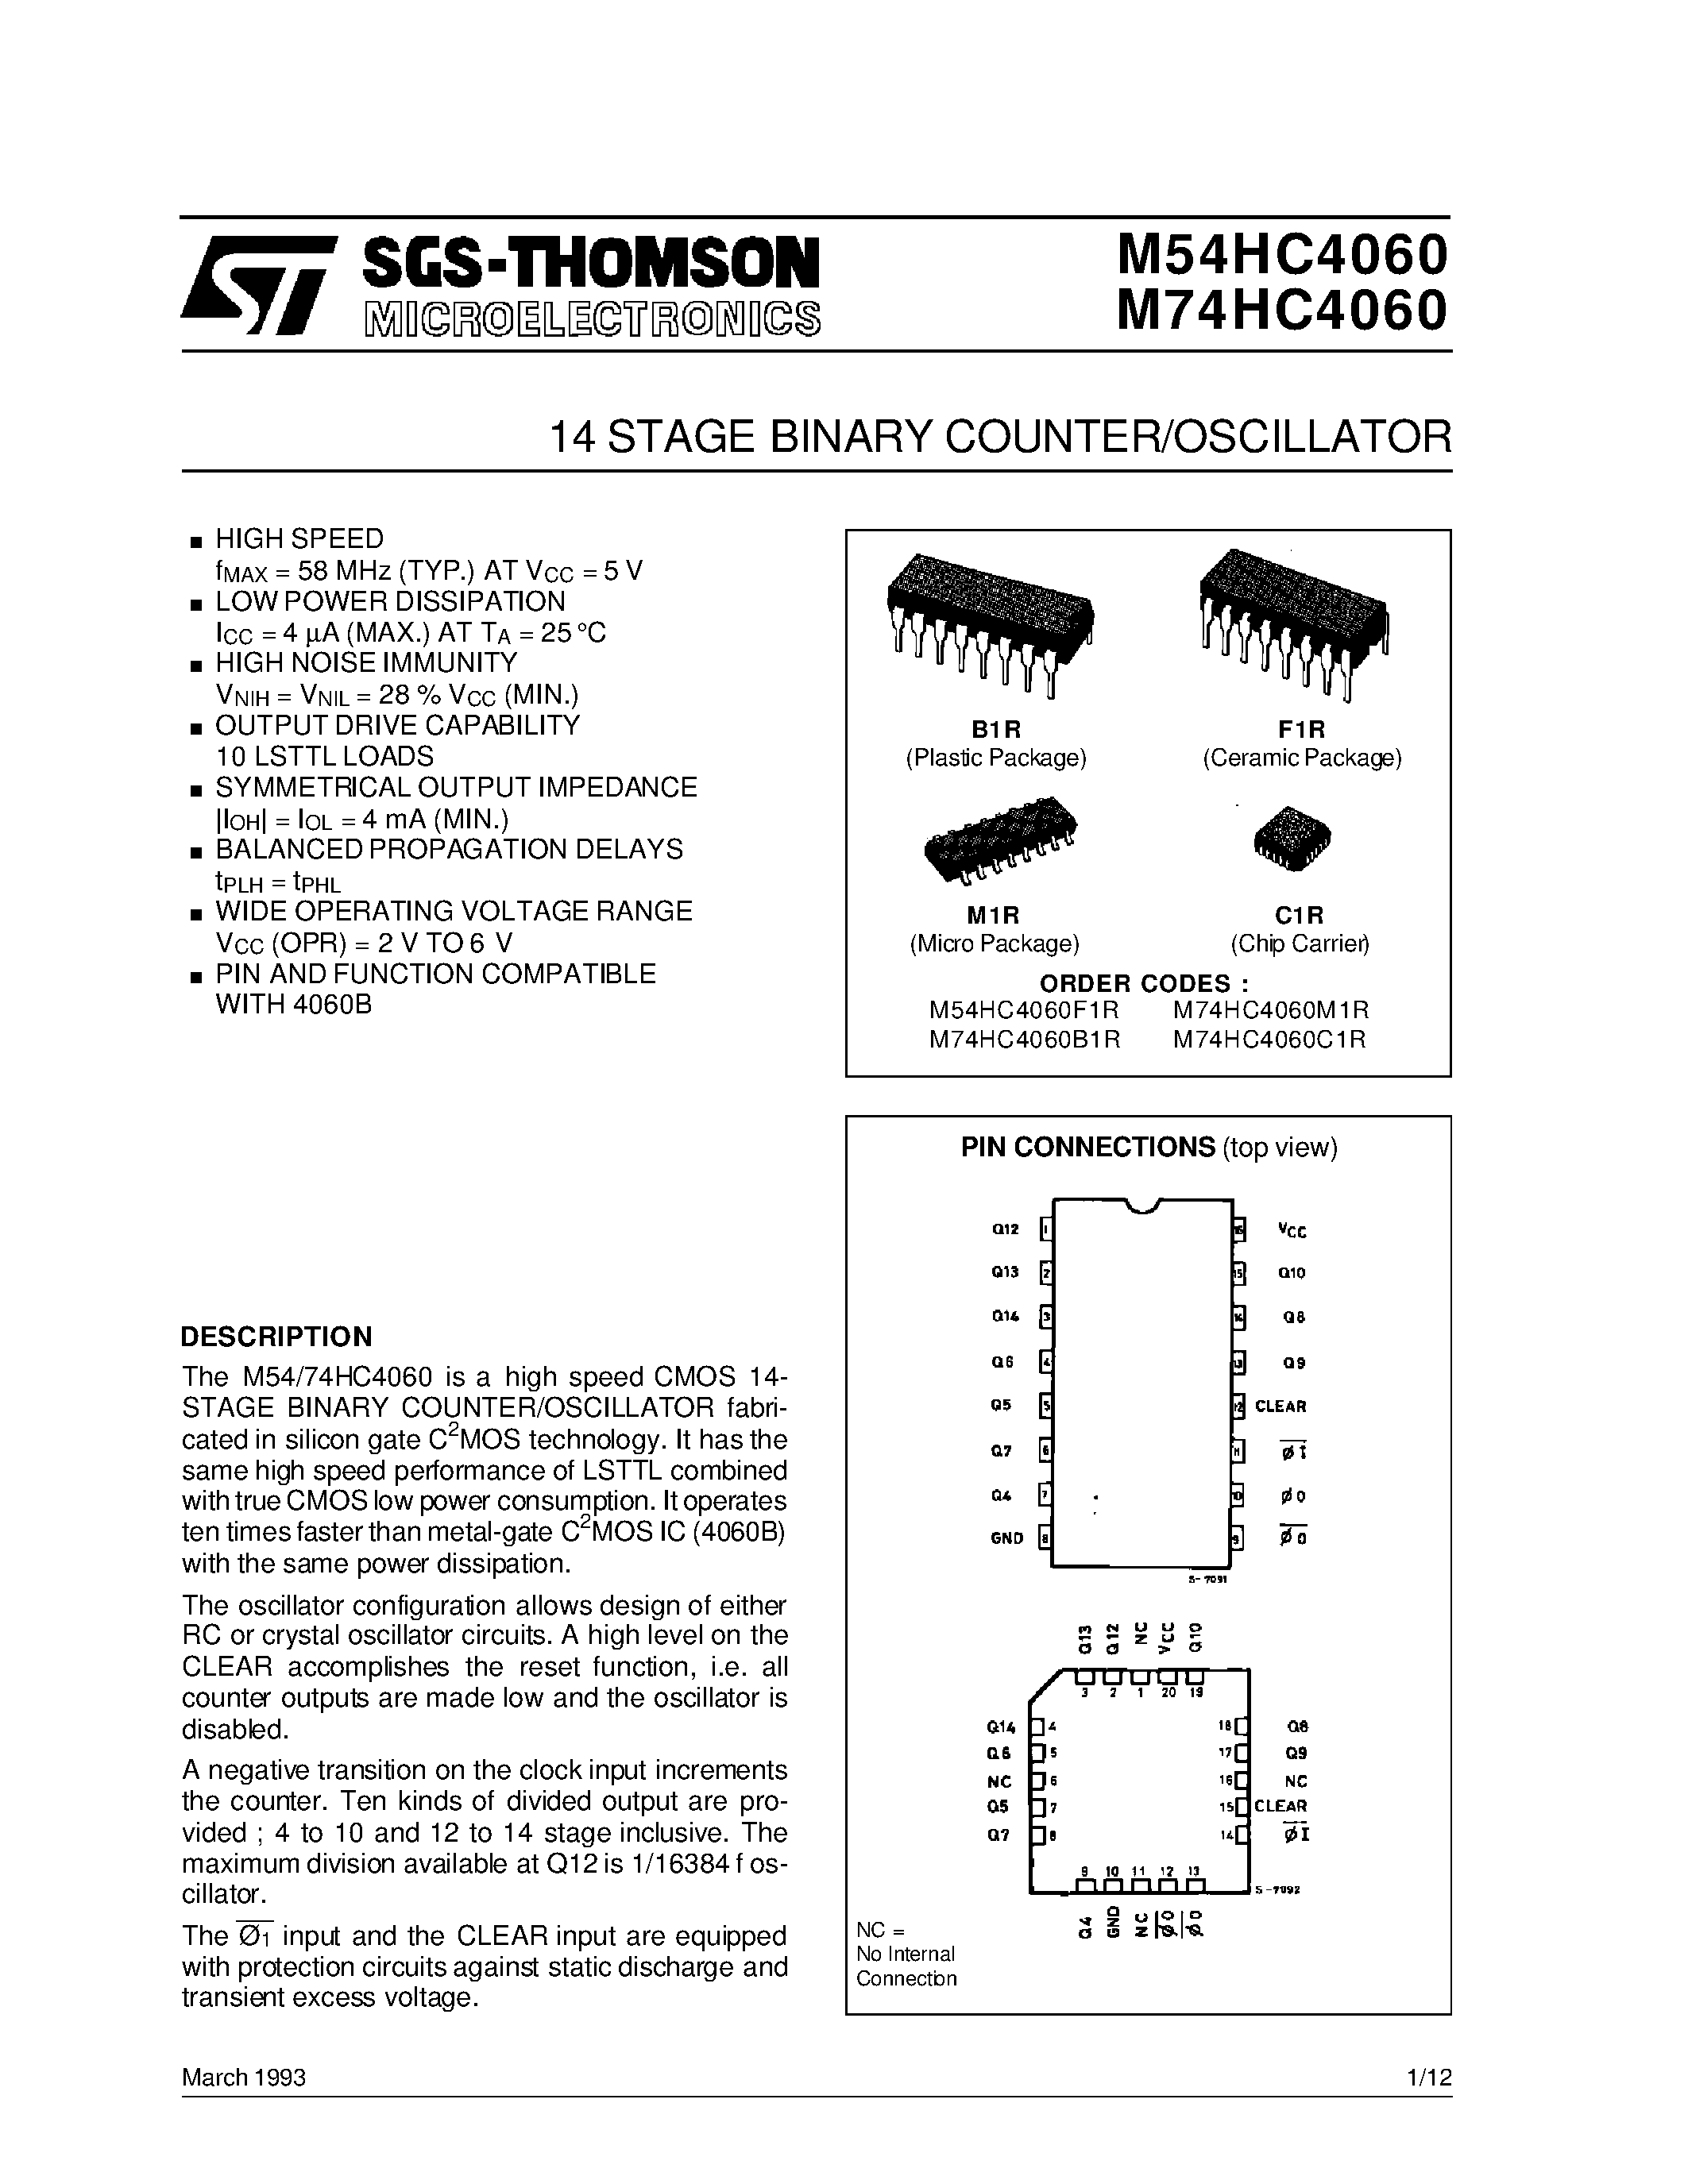 Datasheet M74HC4060 - 14 STAGE BINARY COUNTER/OSCILLATOR page 1